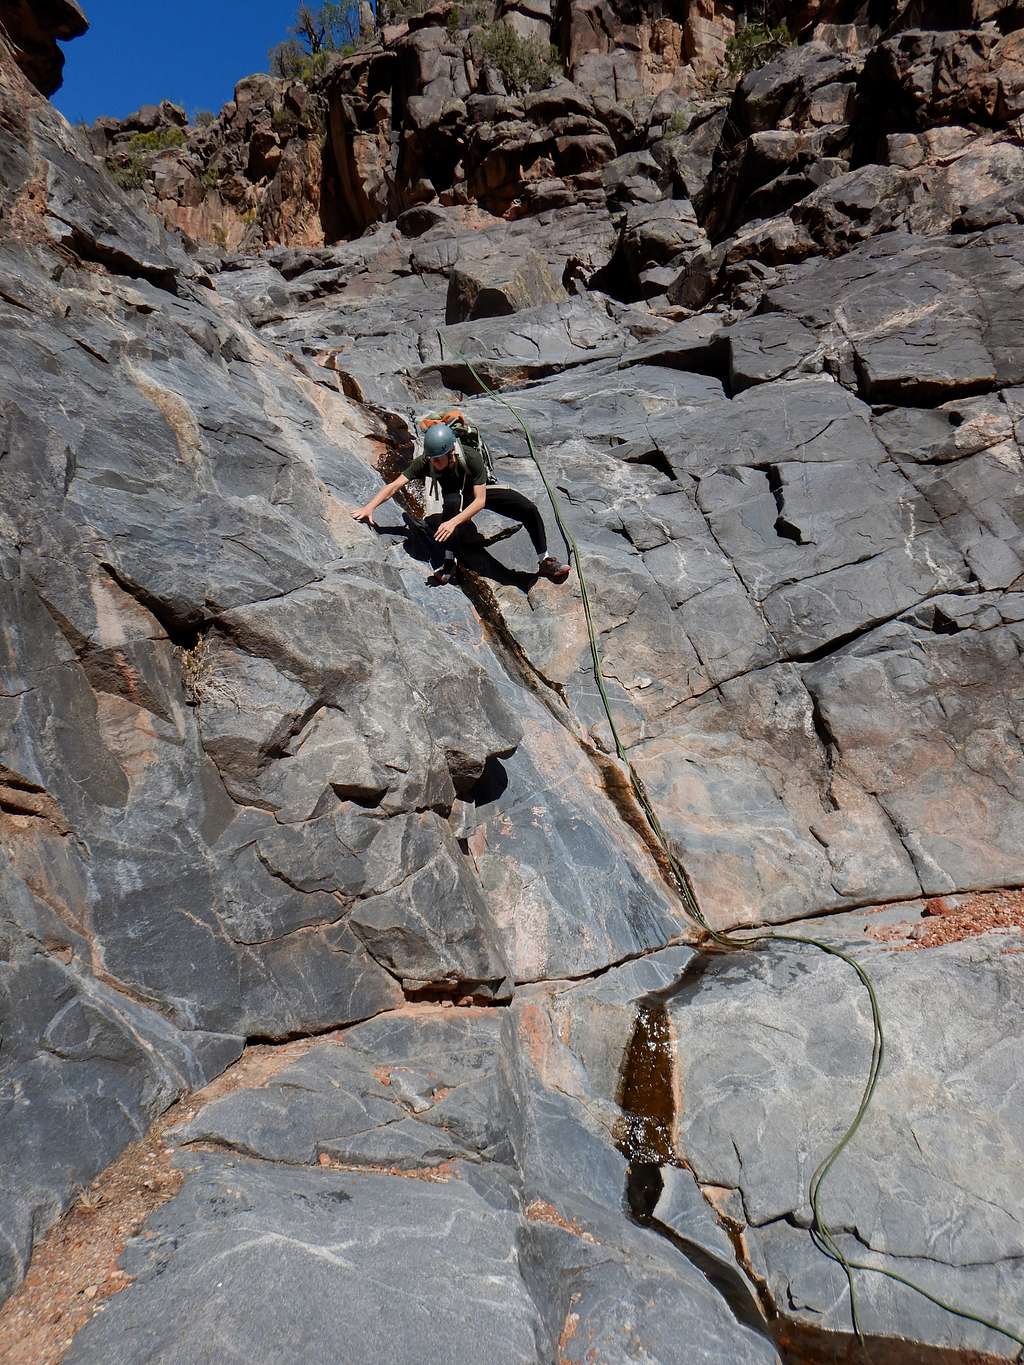 Downclimbing in Columbus Canyon